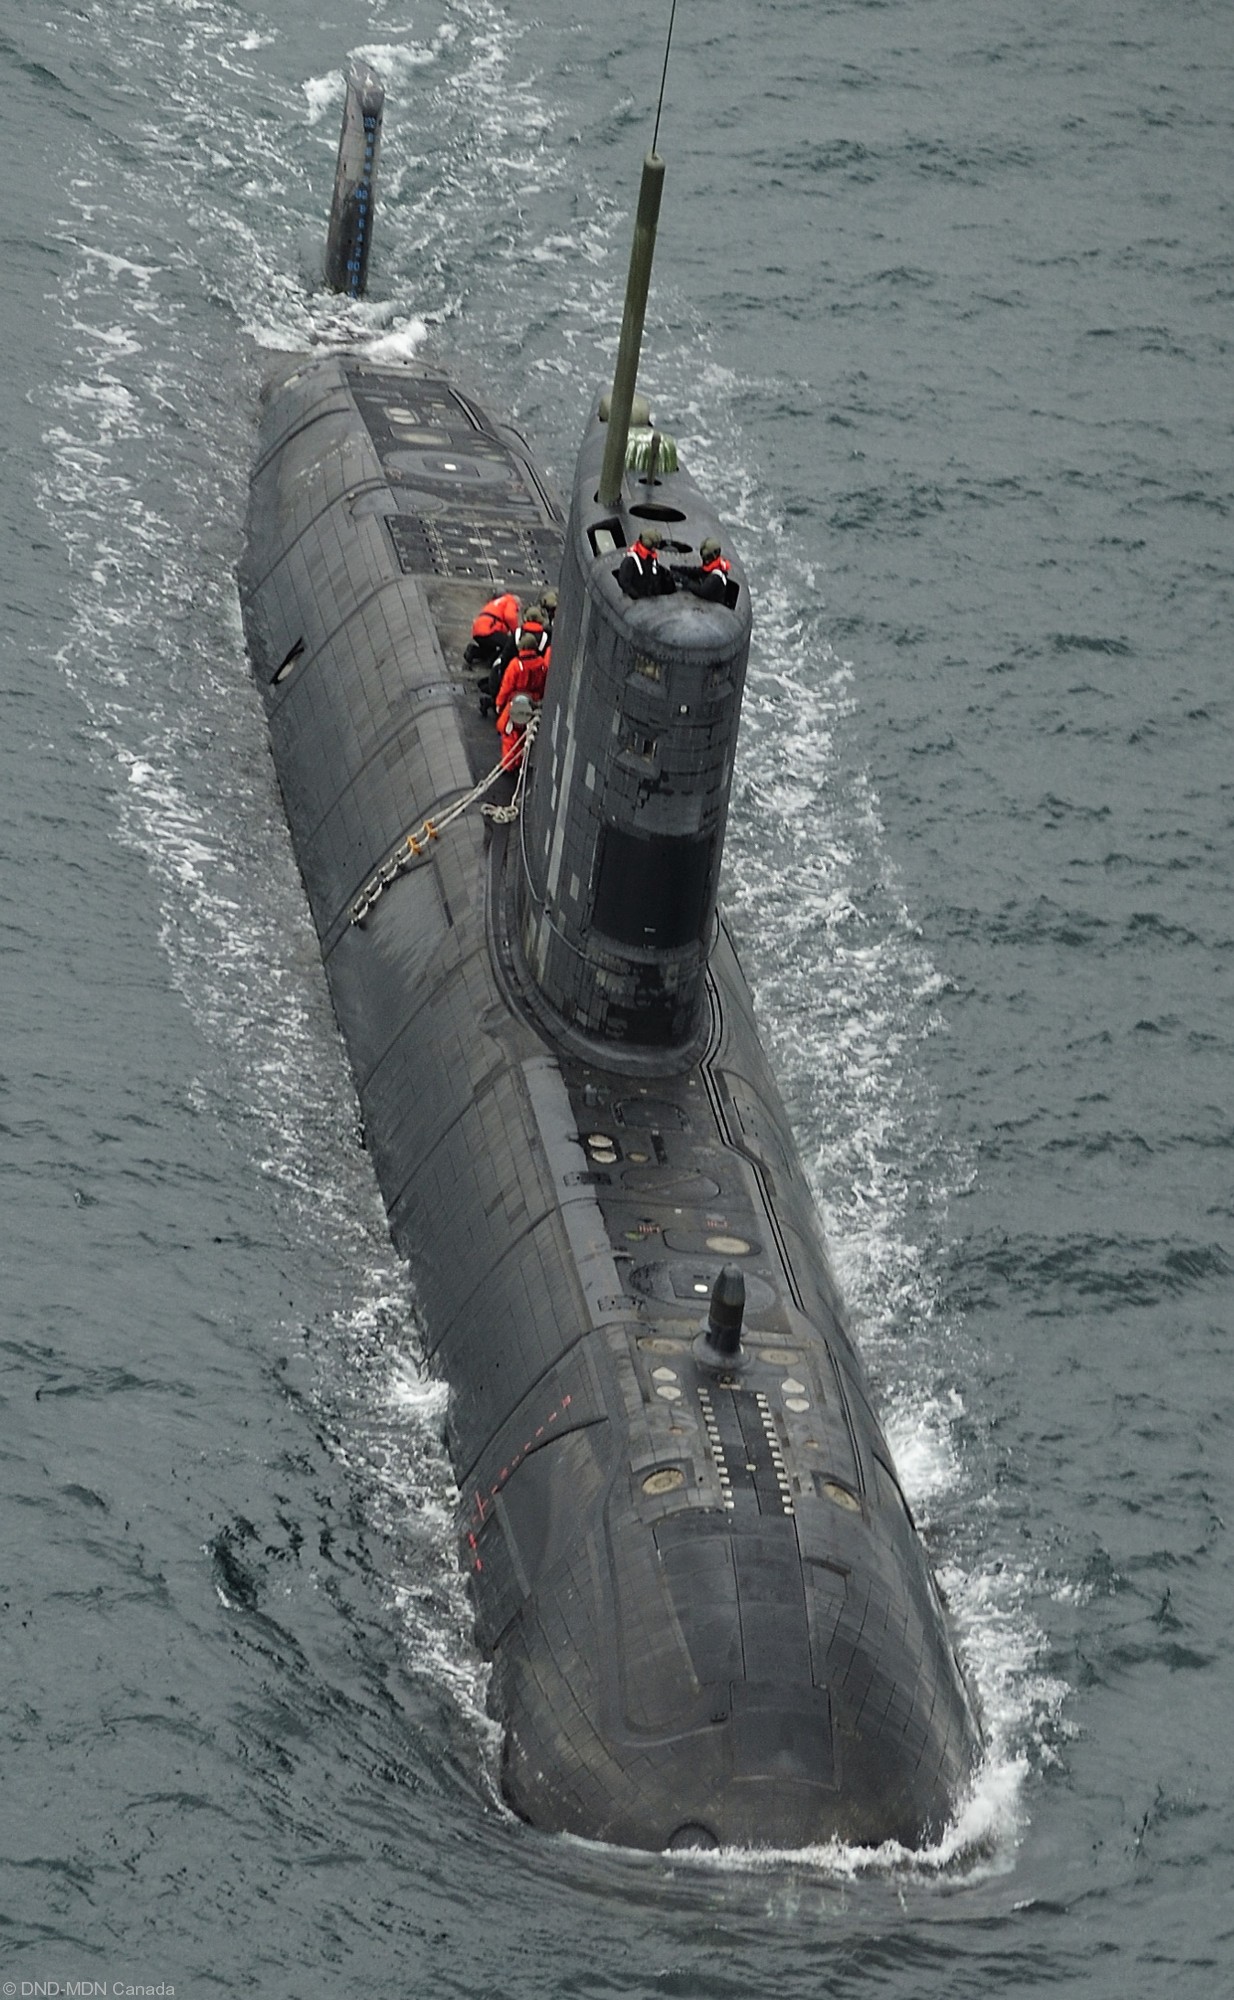 ssk-876 hmcs victoria upholder class attack submarine hunter killer ncsm royal canadian navy 30